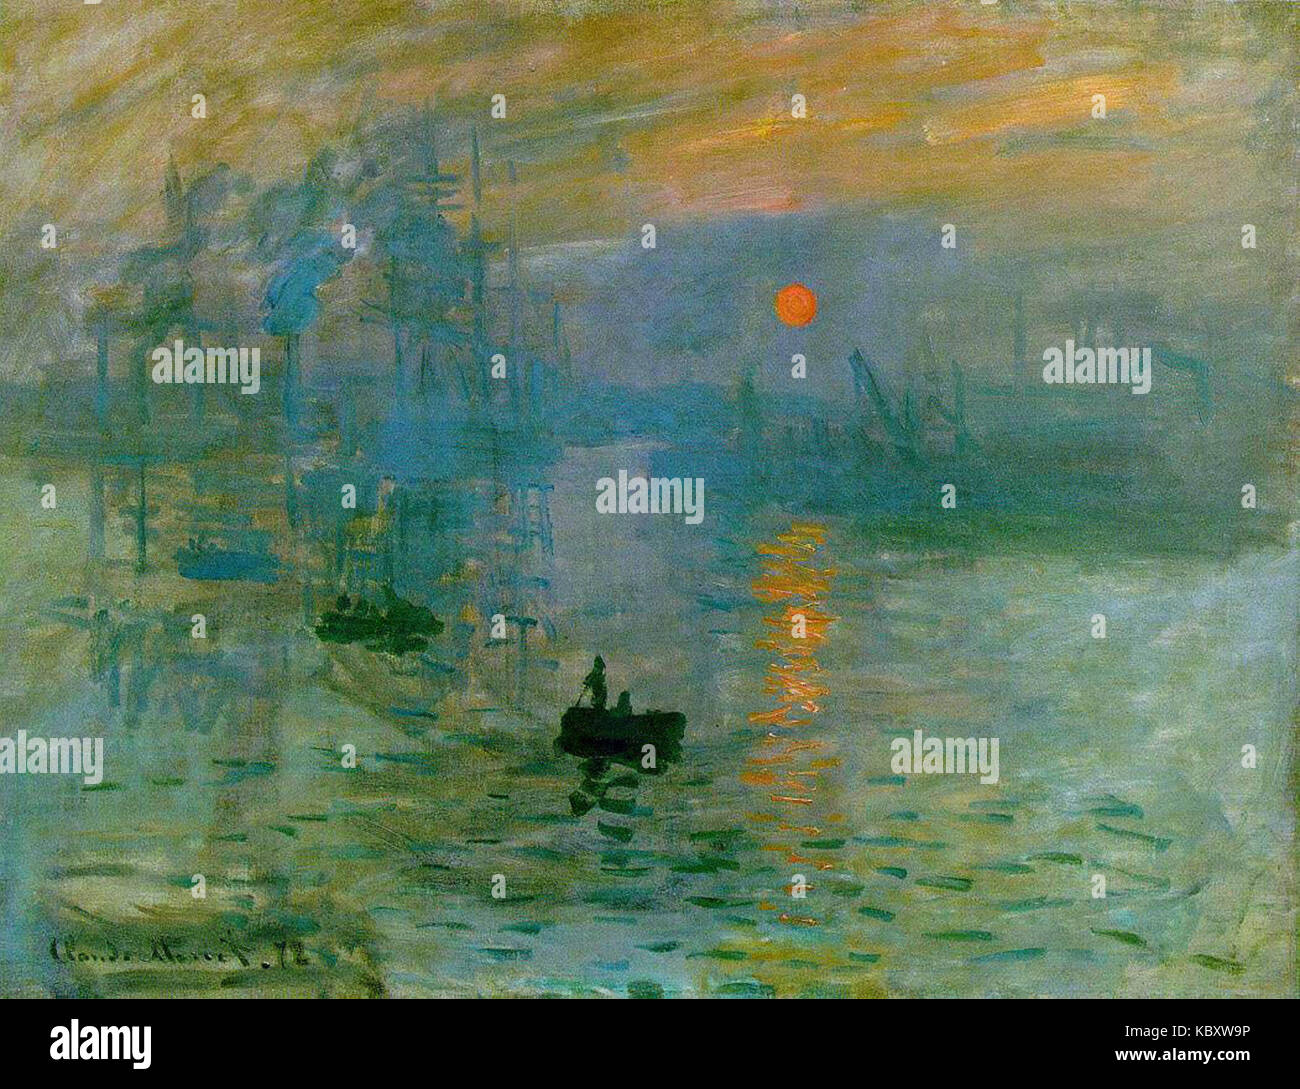 Claude Monet, Impression, soleil levant, 1872 Stock Photo